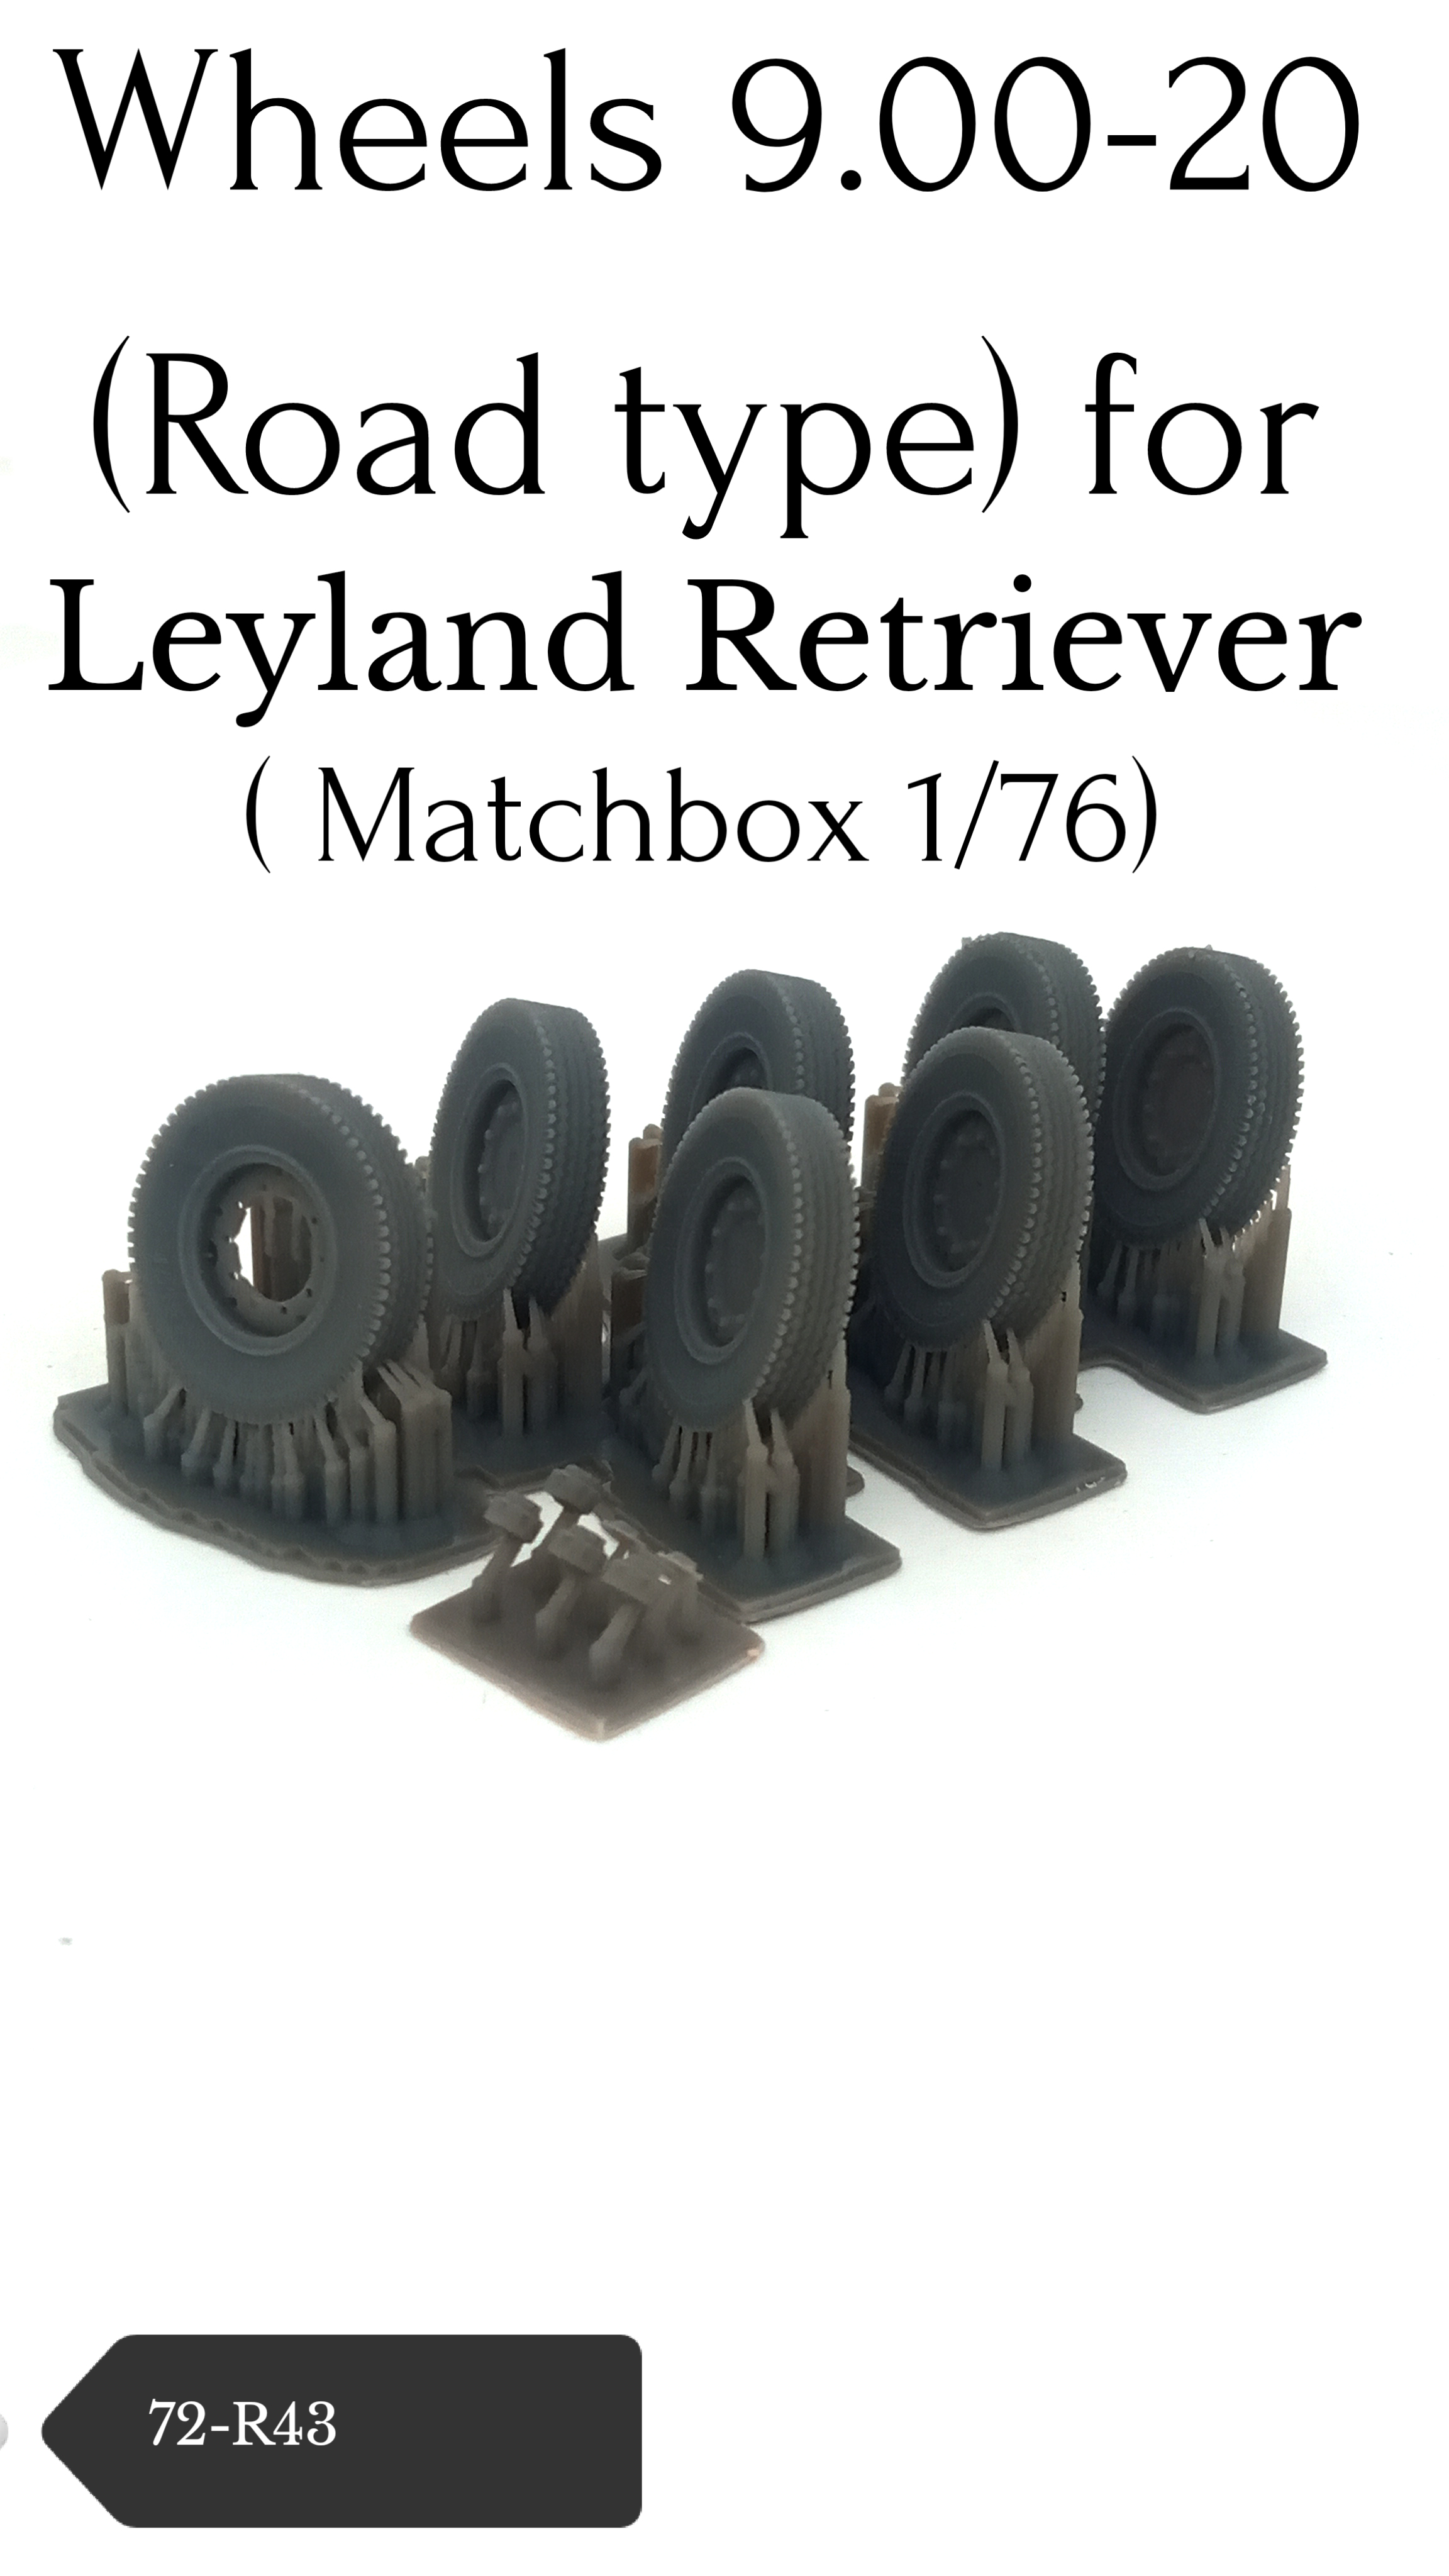 Leyland Retriever road tyre wheels (MX)